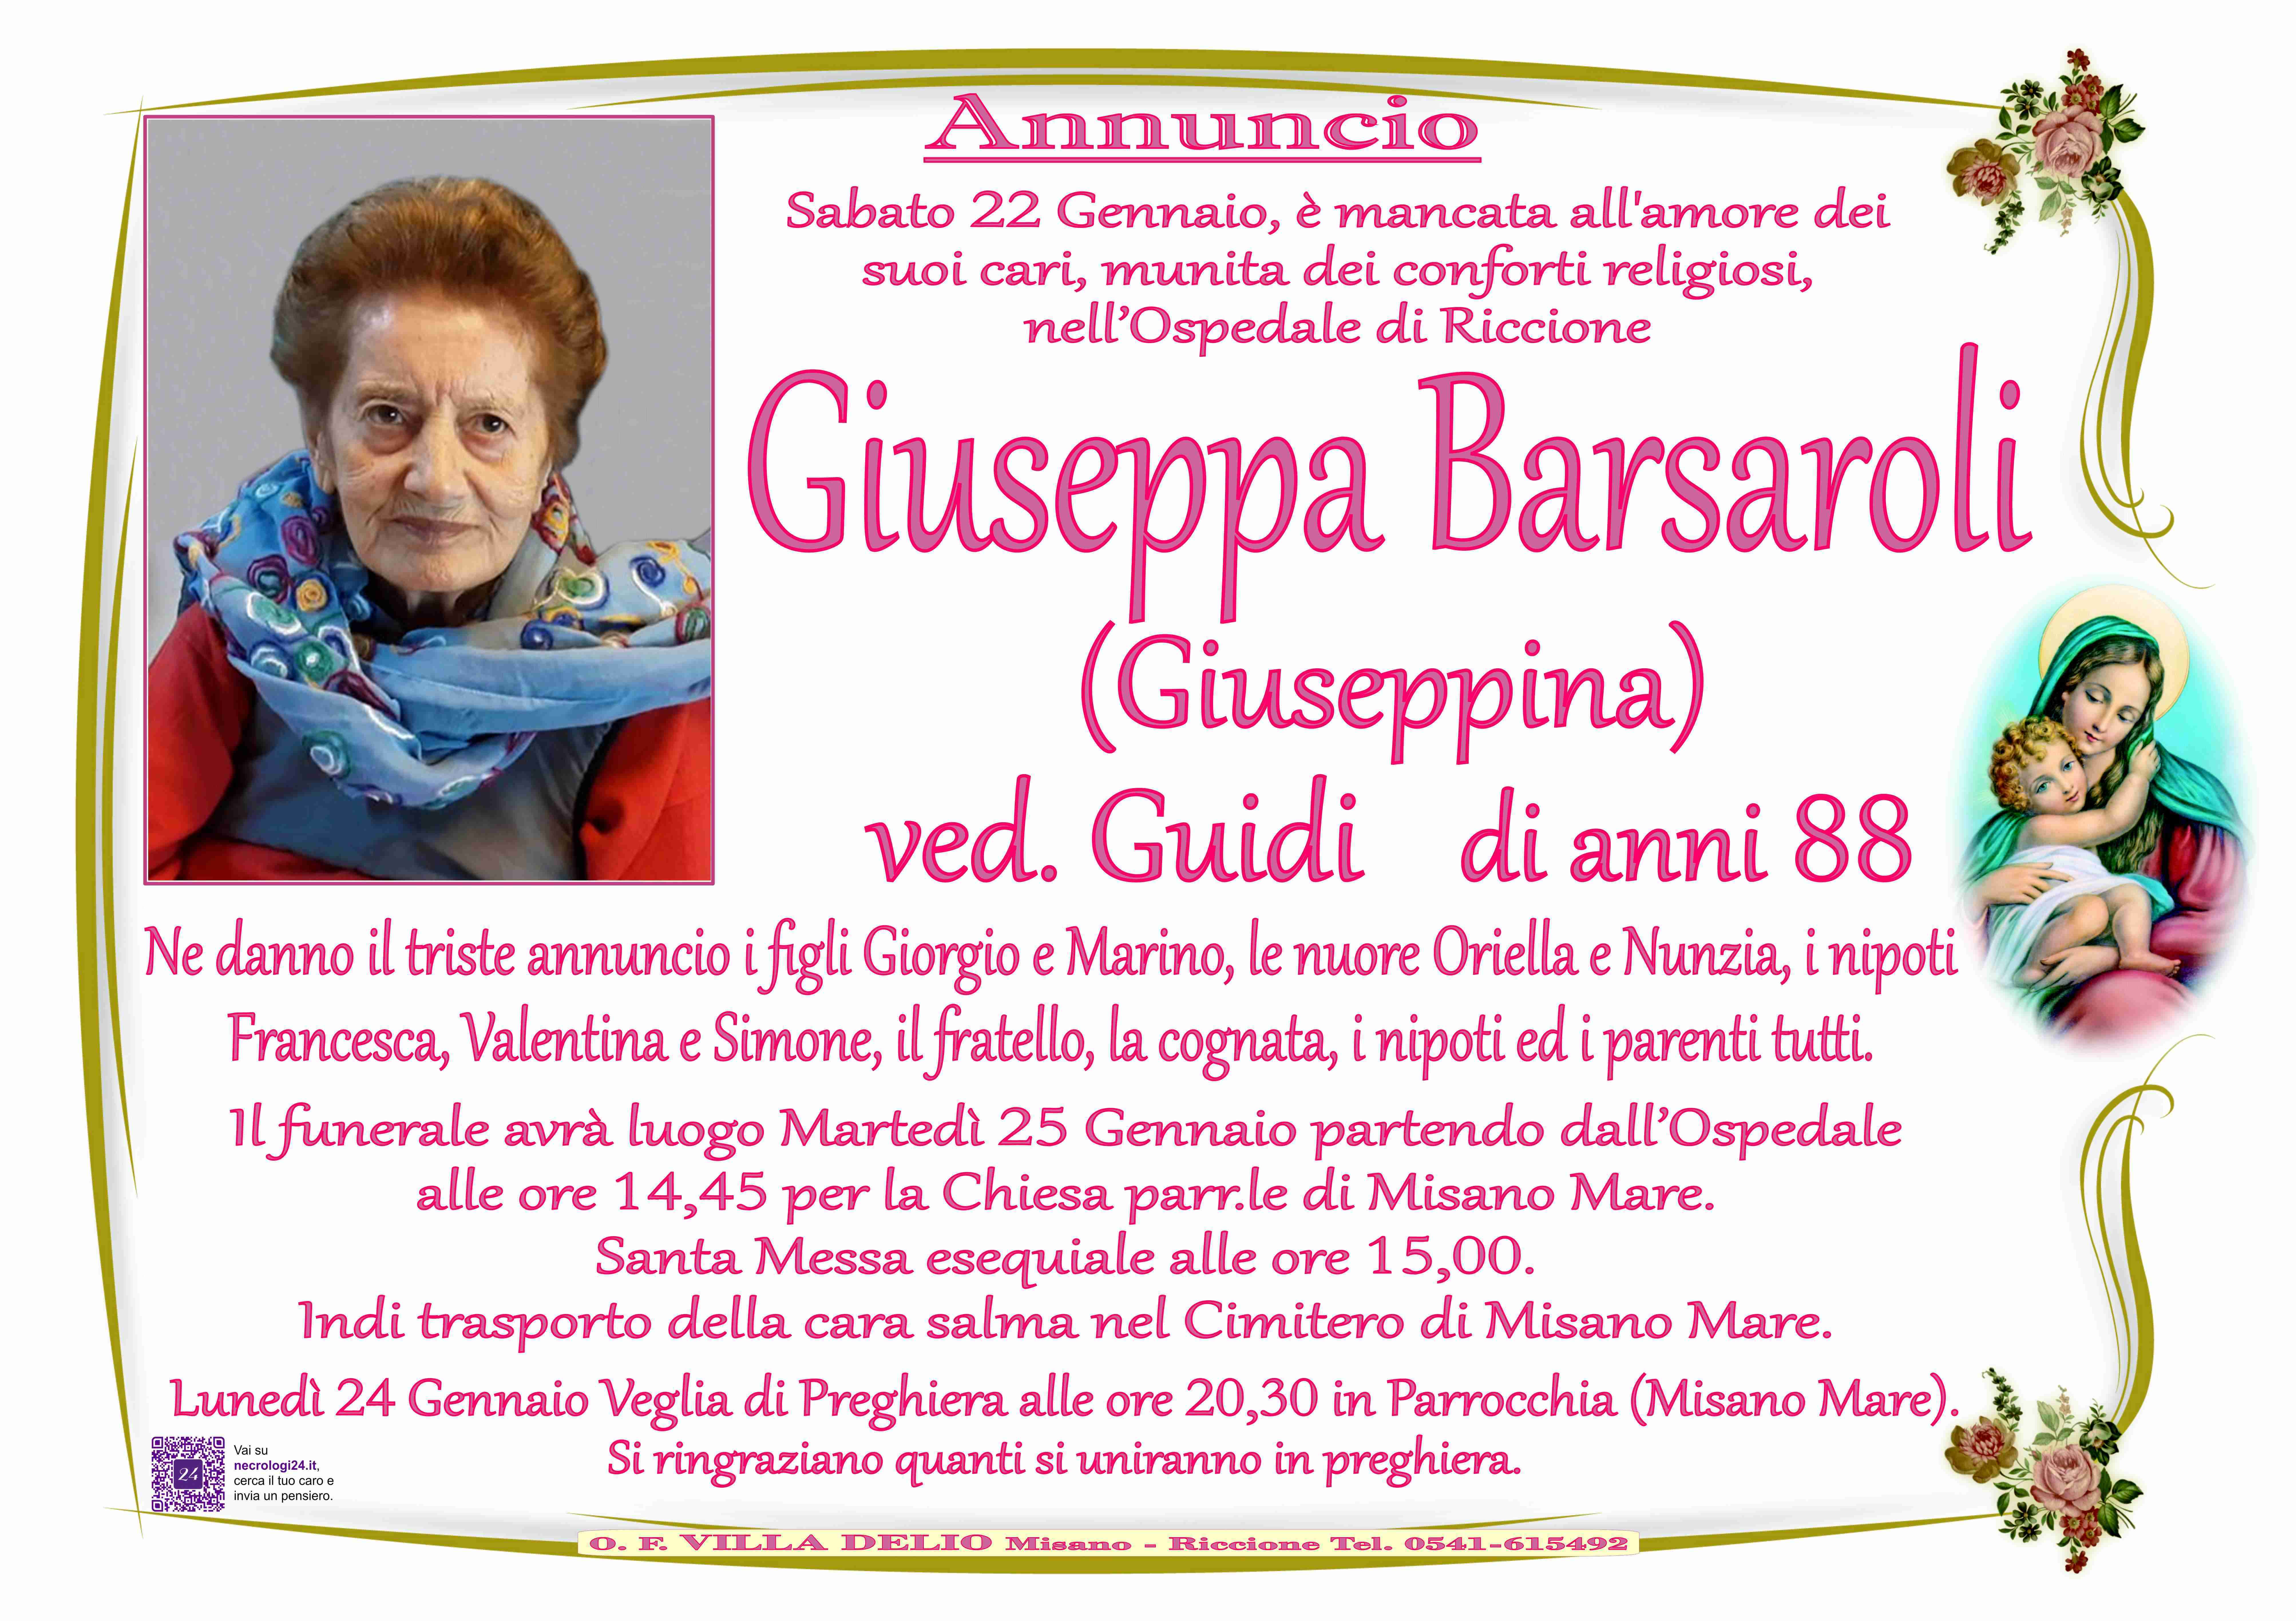 Giuseppa Barsaroli